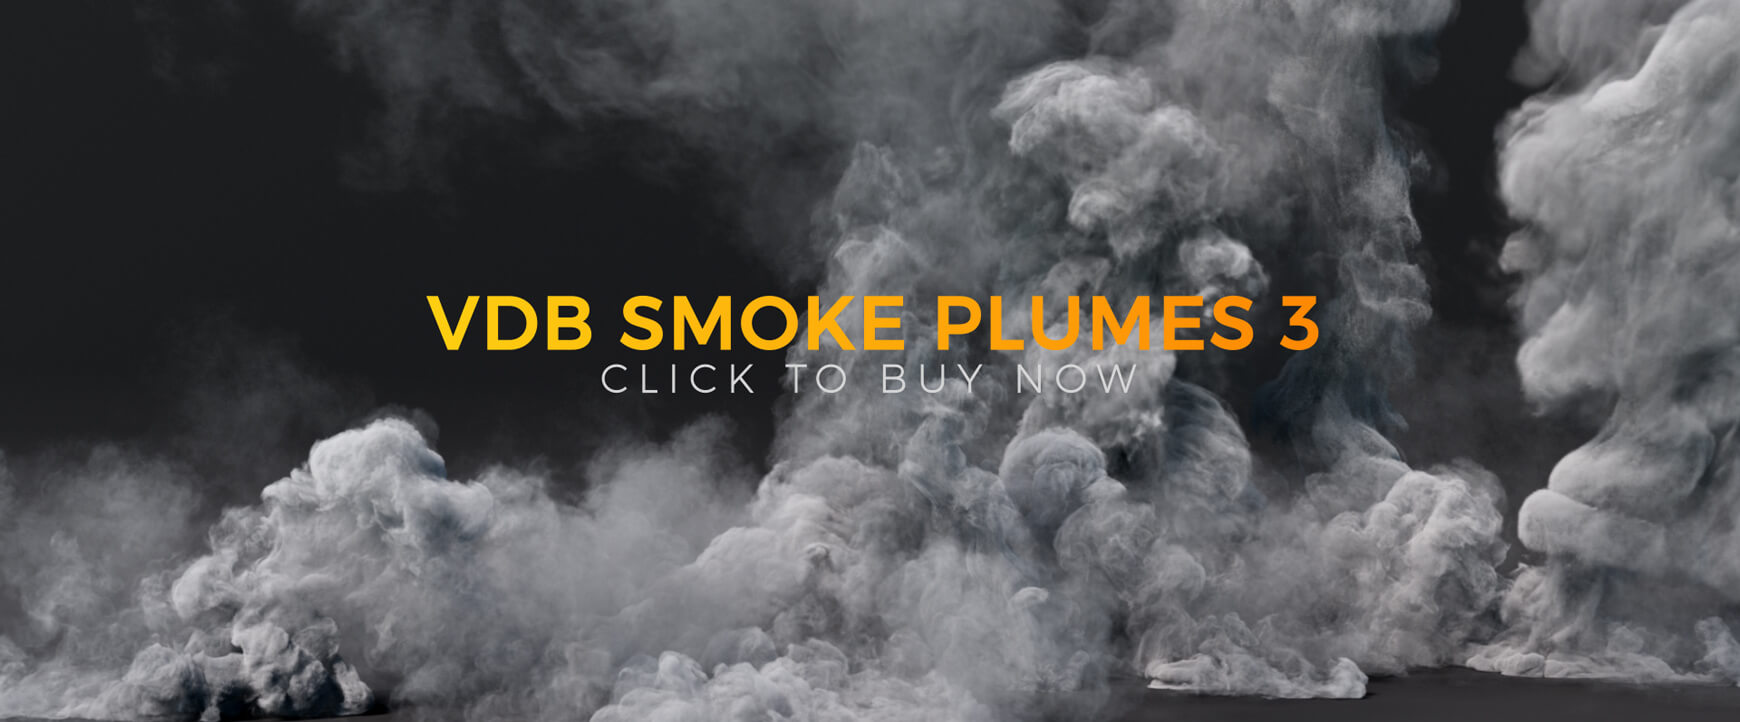 VFX Elements VDB Smoke Plumes 3 Buy Now